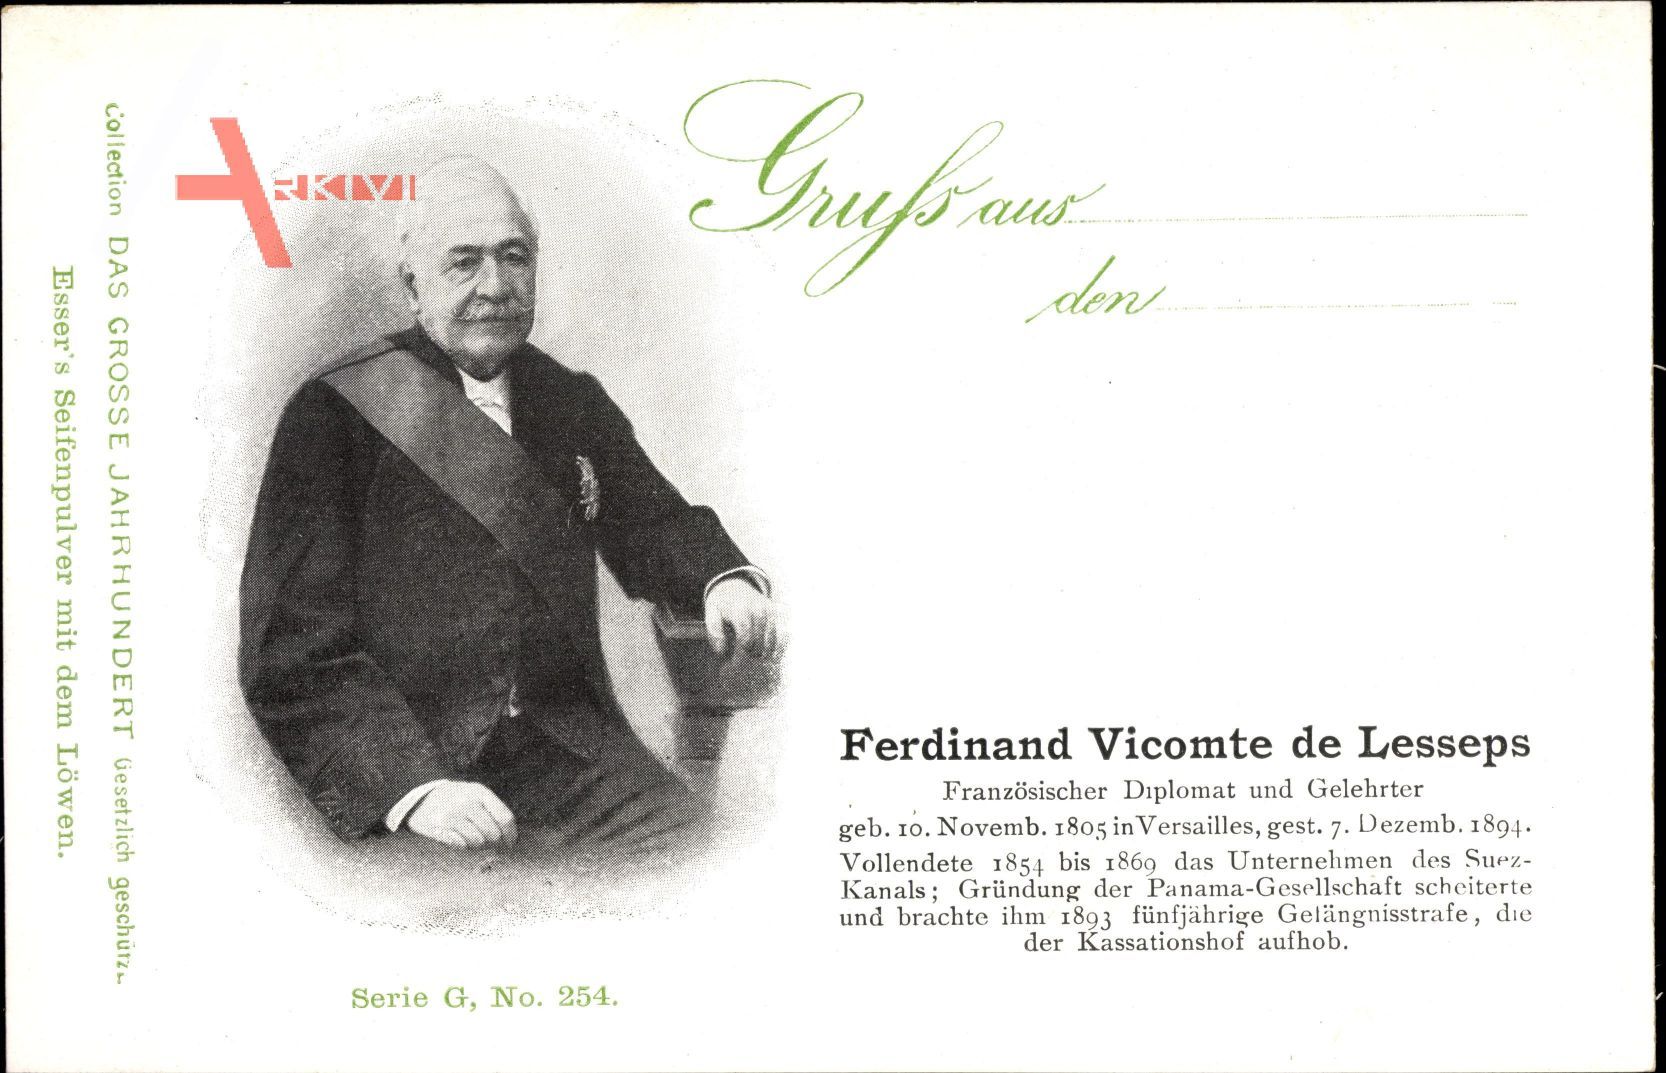 Ferdinand Vicomte de Lesseps, Franz. Diplomat, 1805 bis 1891